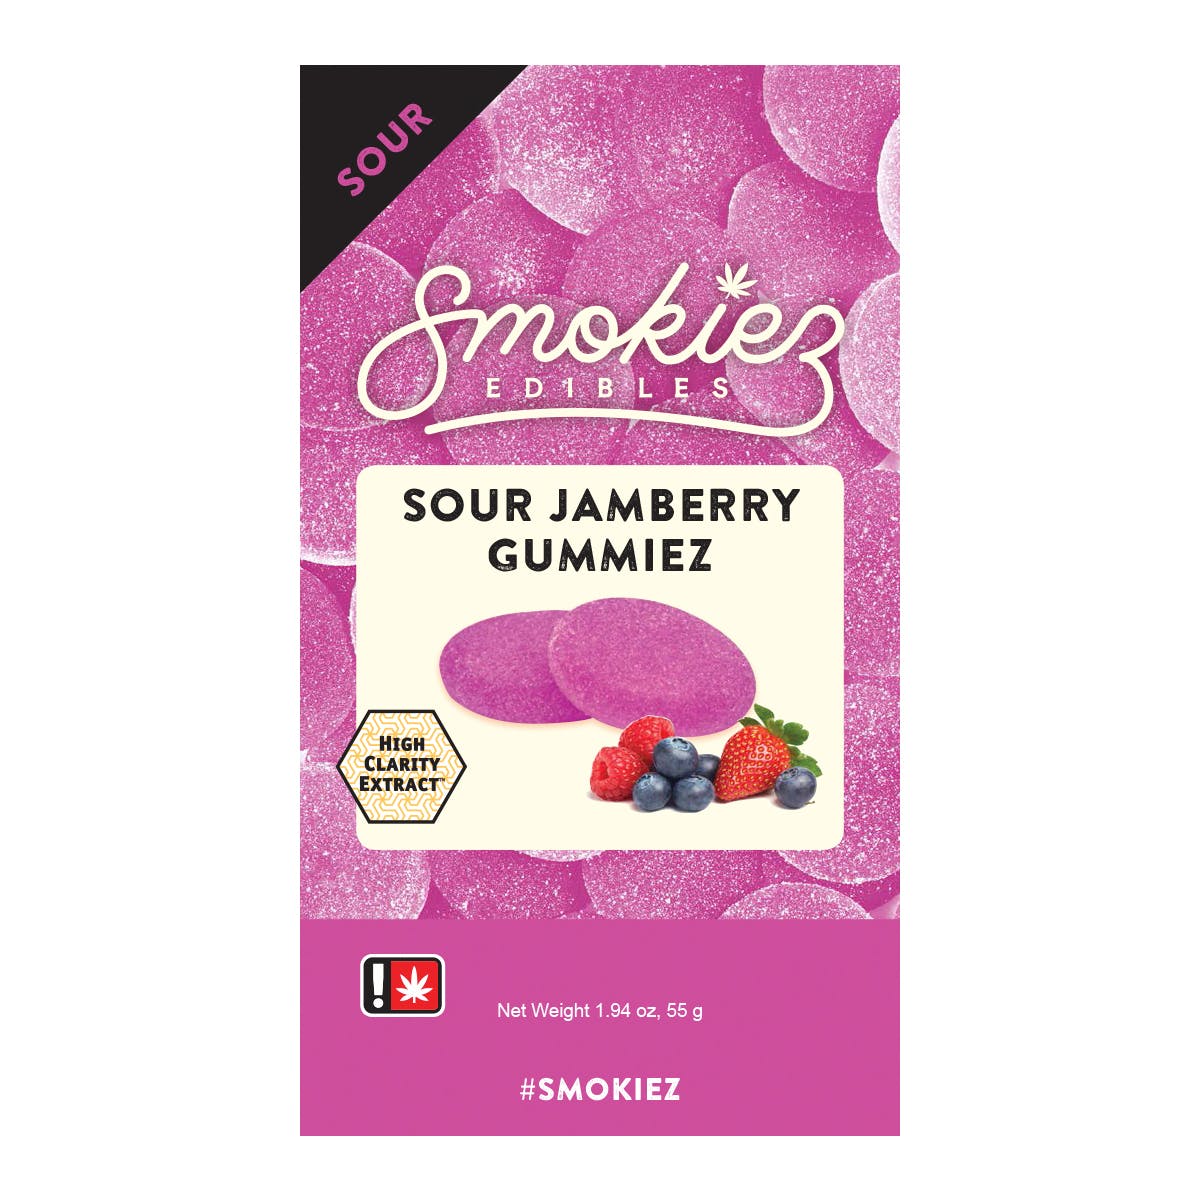 edible-smokiez-edibles-sour-jamberry-gummiez-2c-50-mg